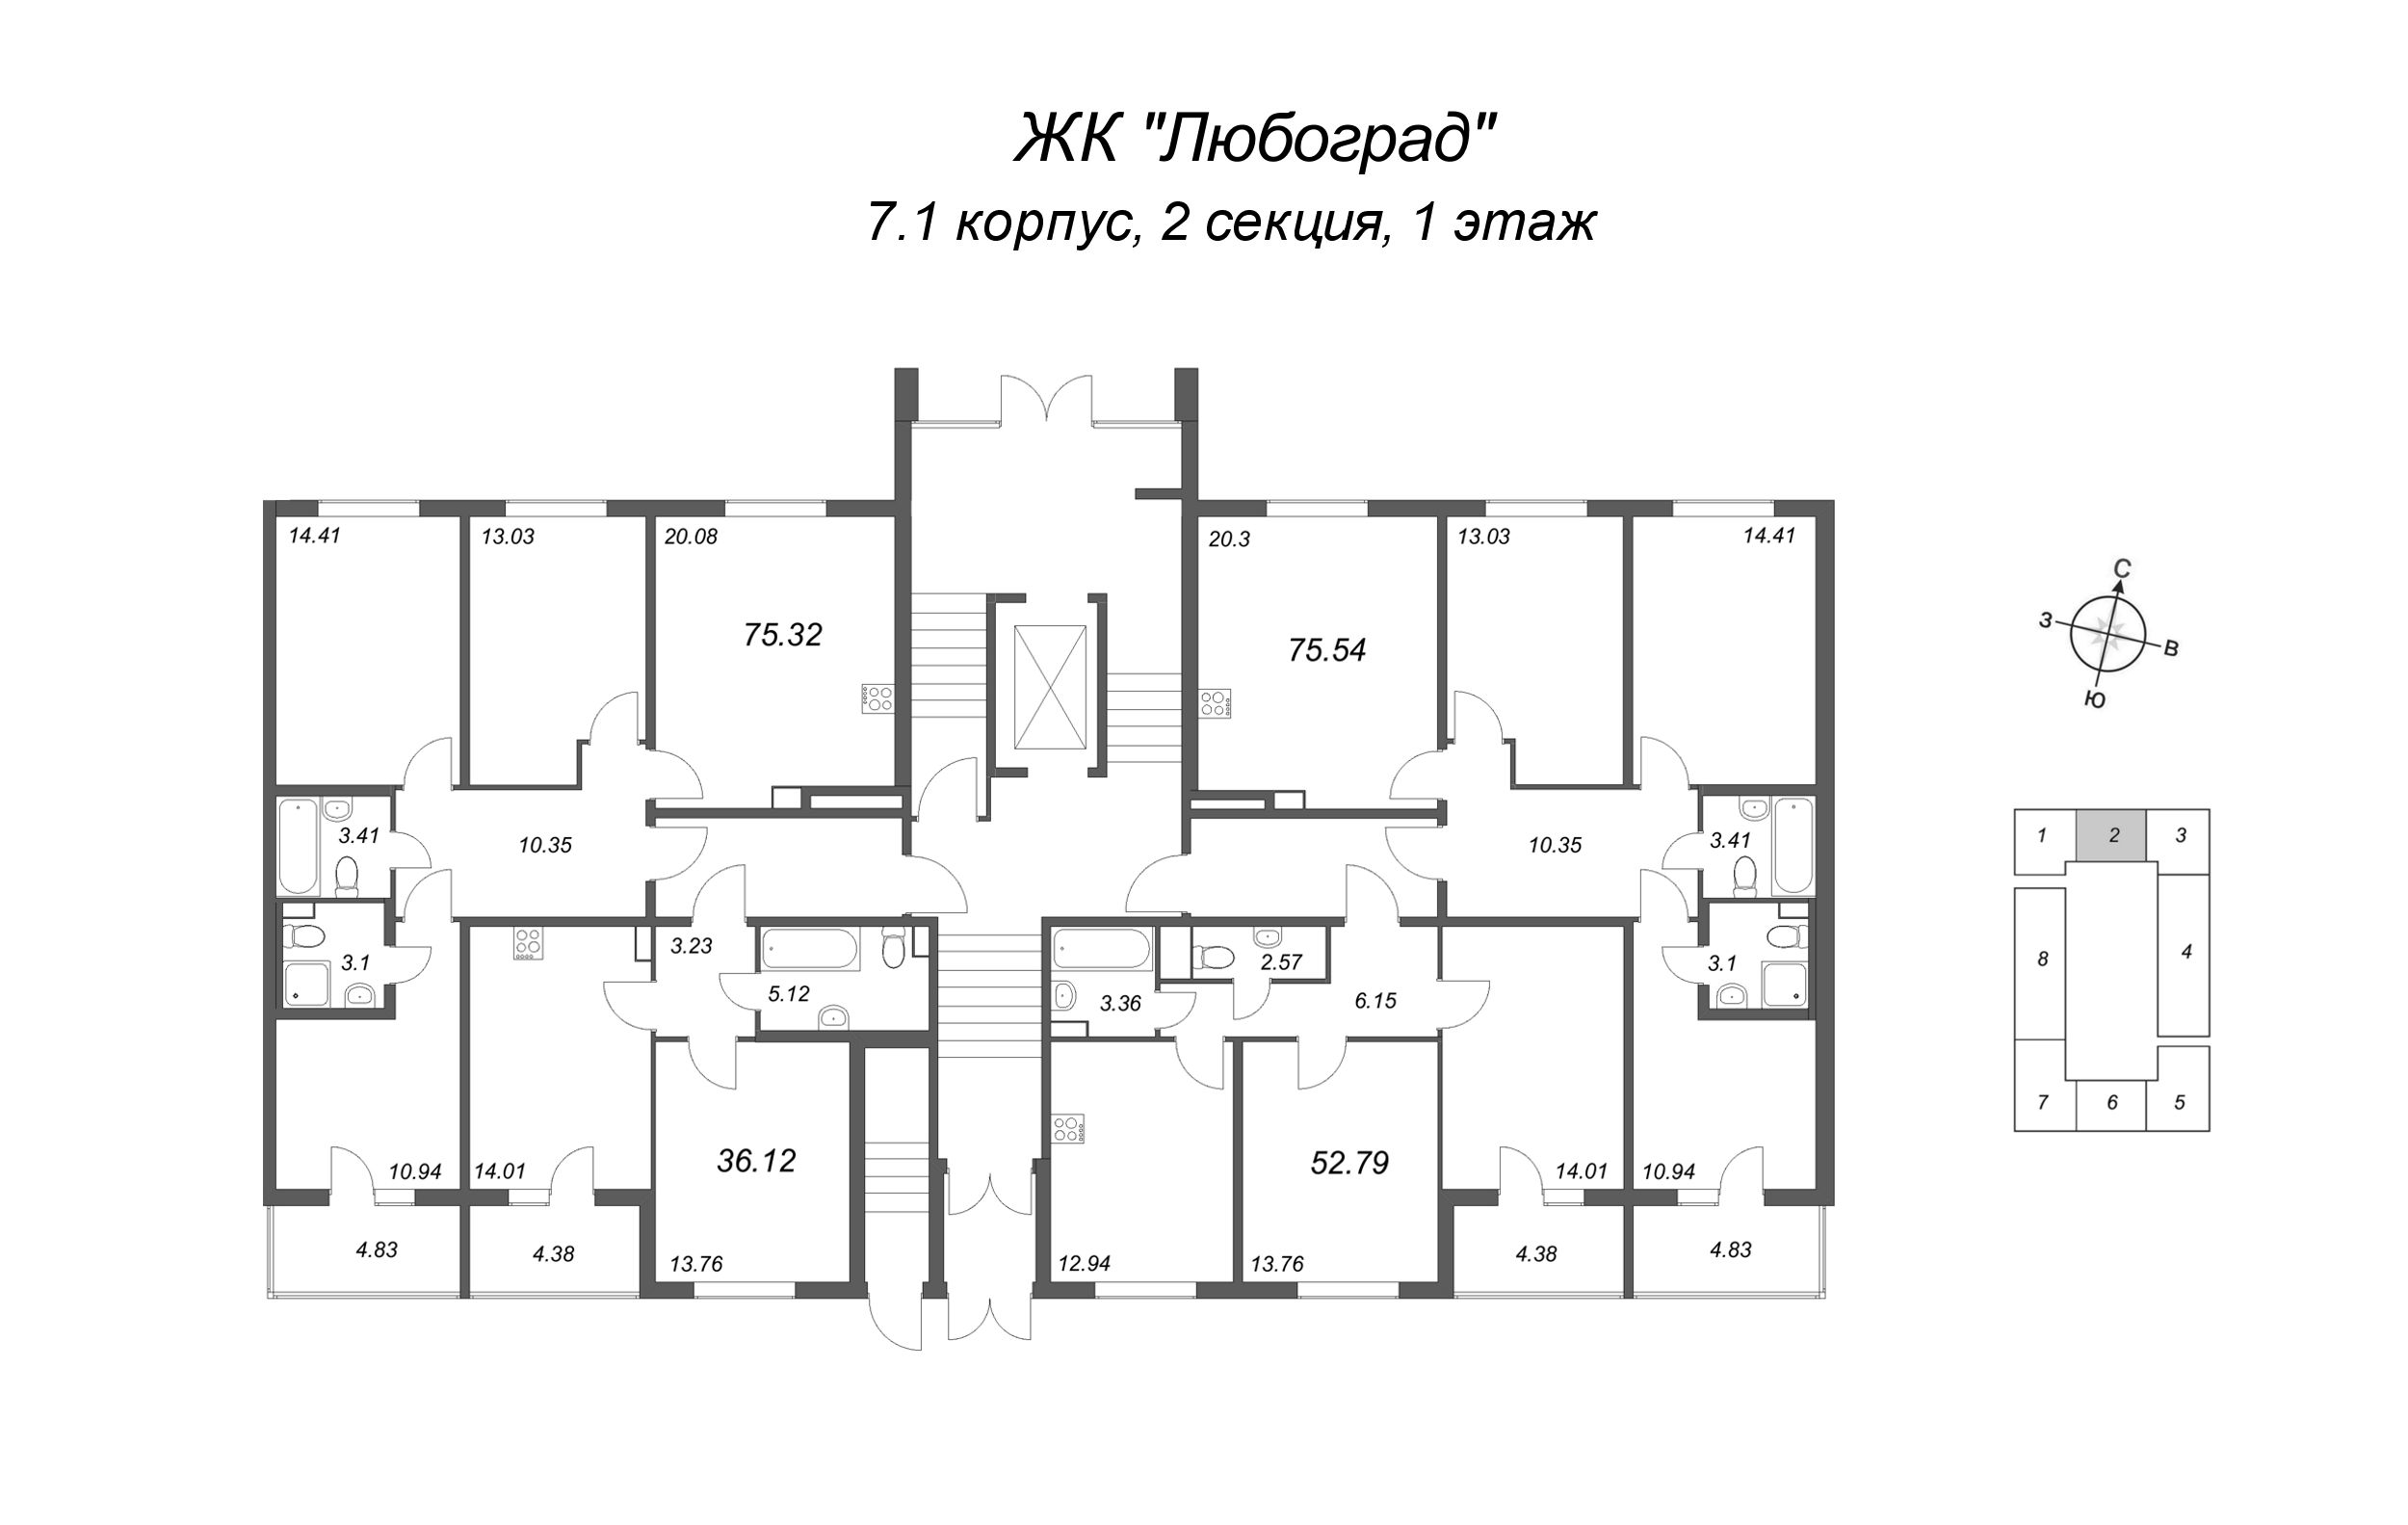 4-комнатная (Евро) квартира, 75.32 м² - планировка этажа